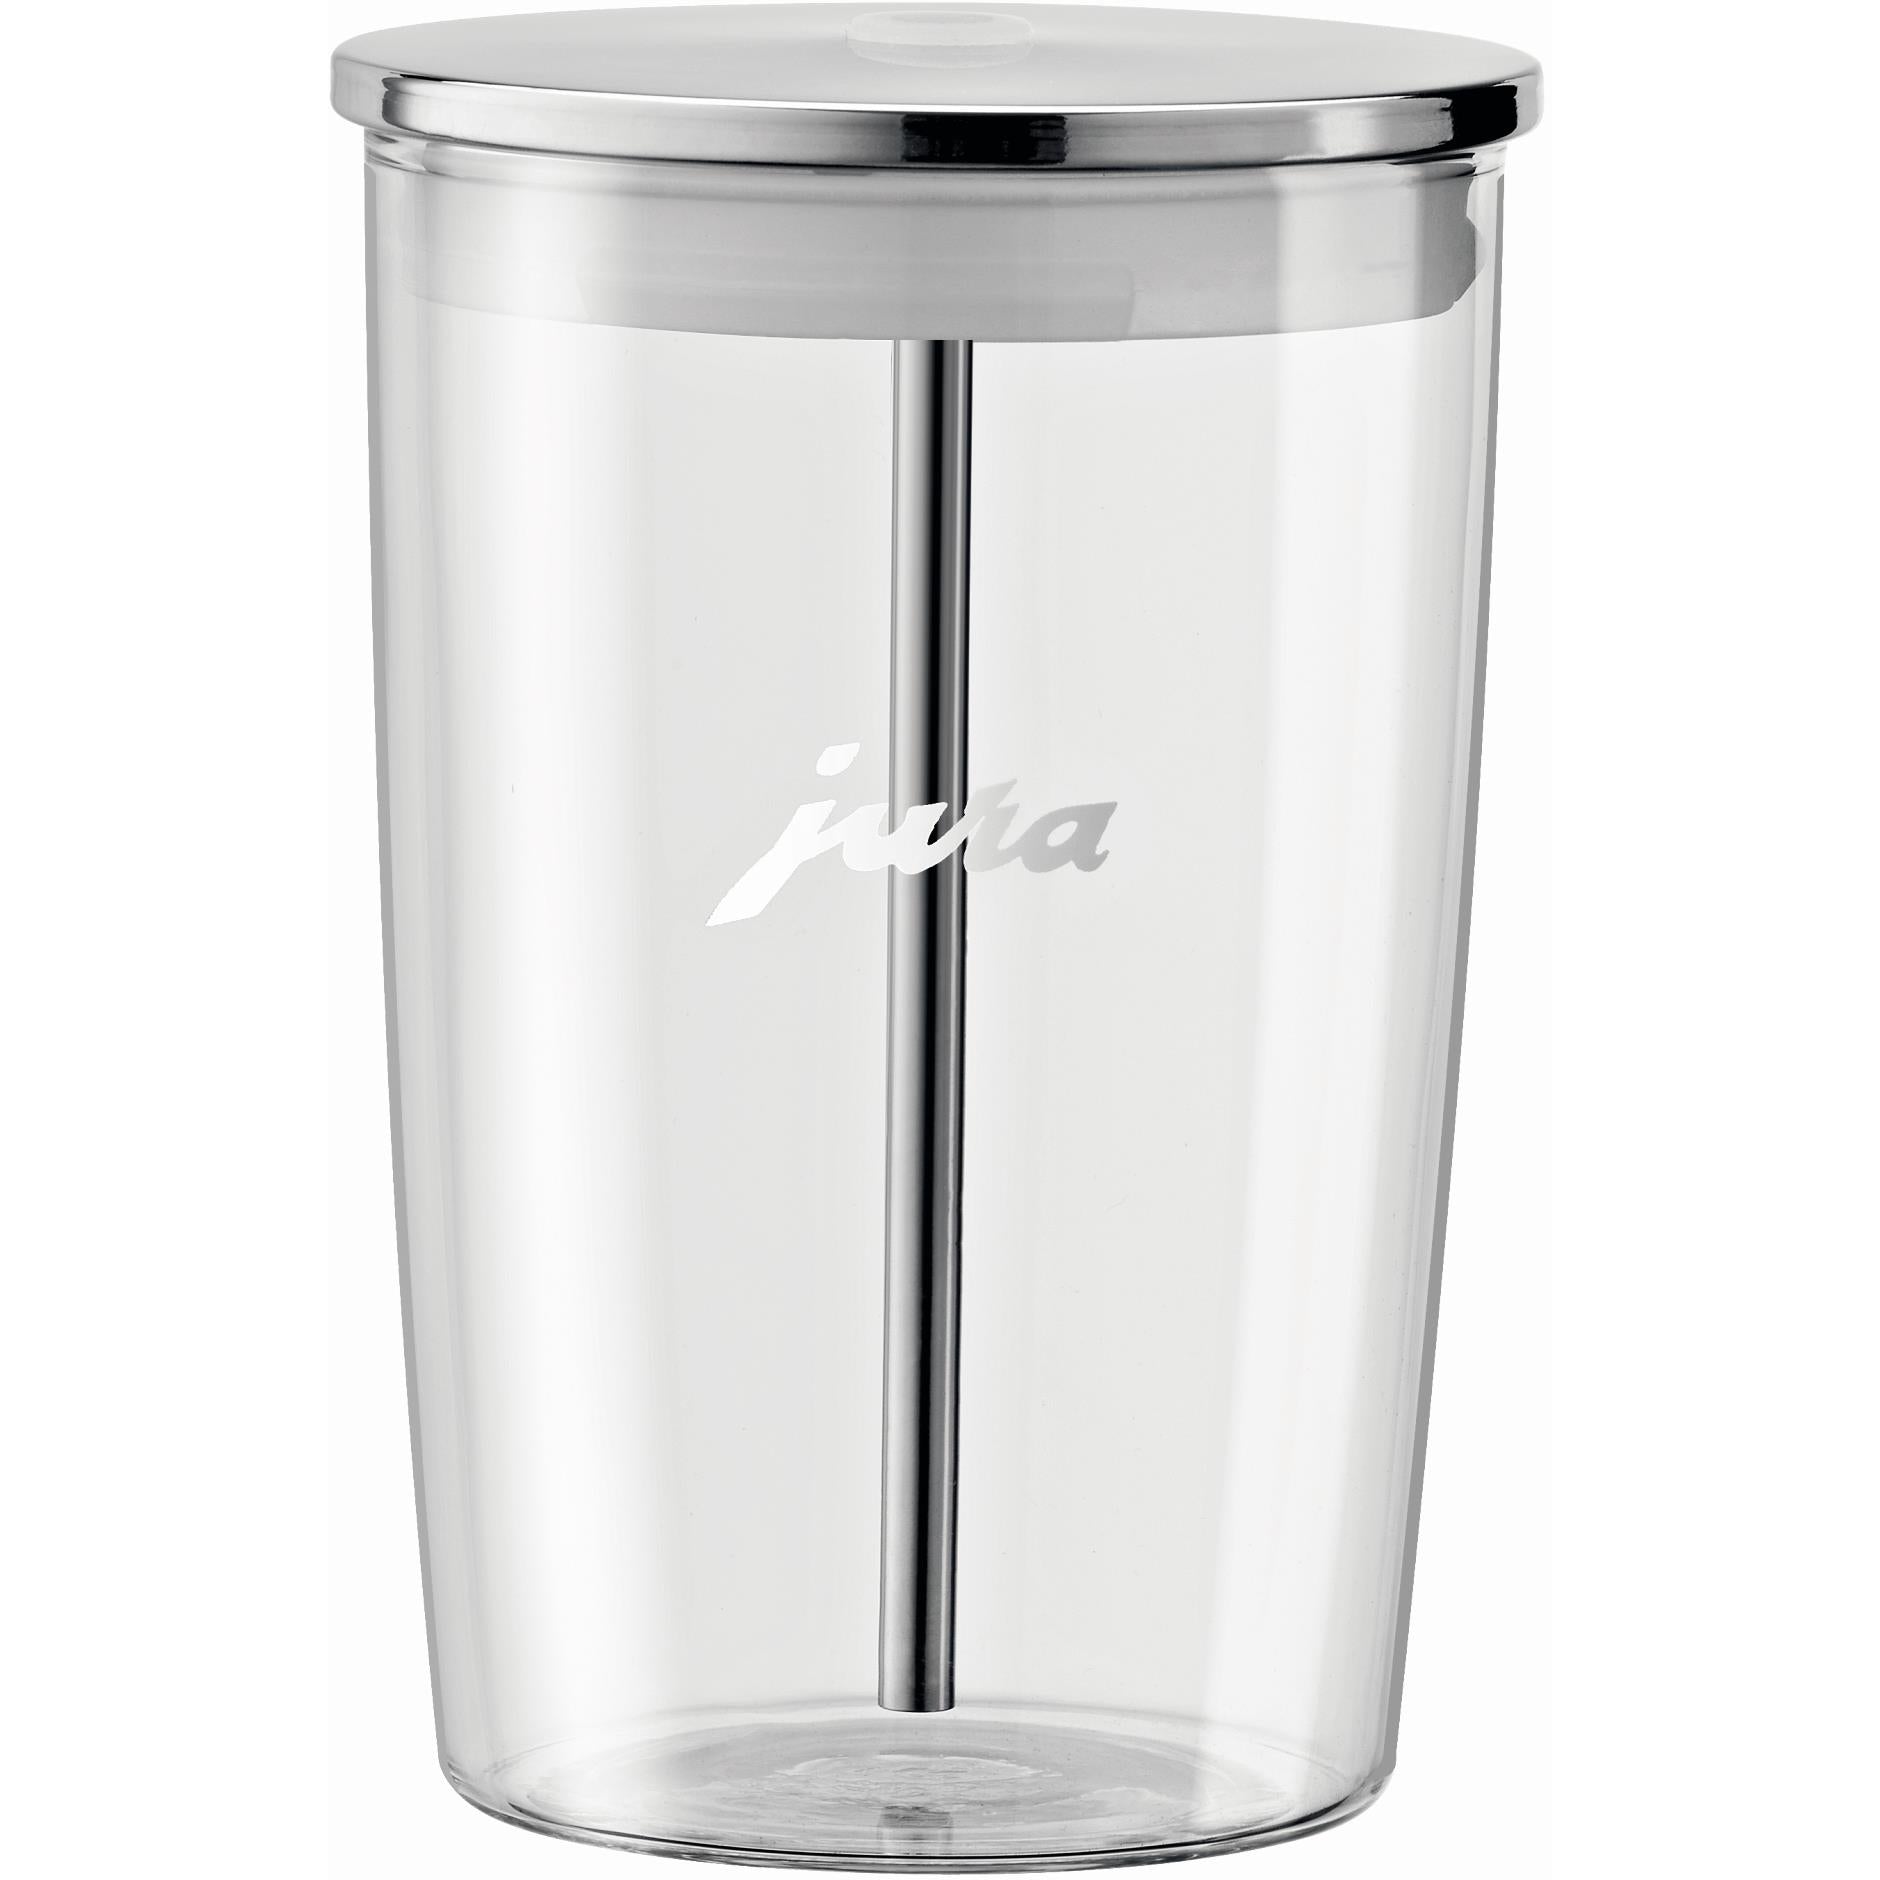 jura glass milk container (500ml)